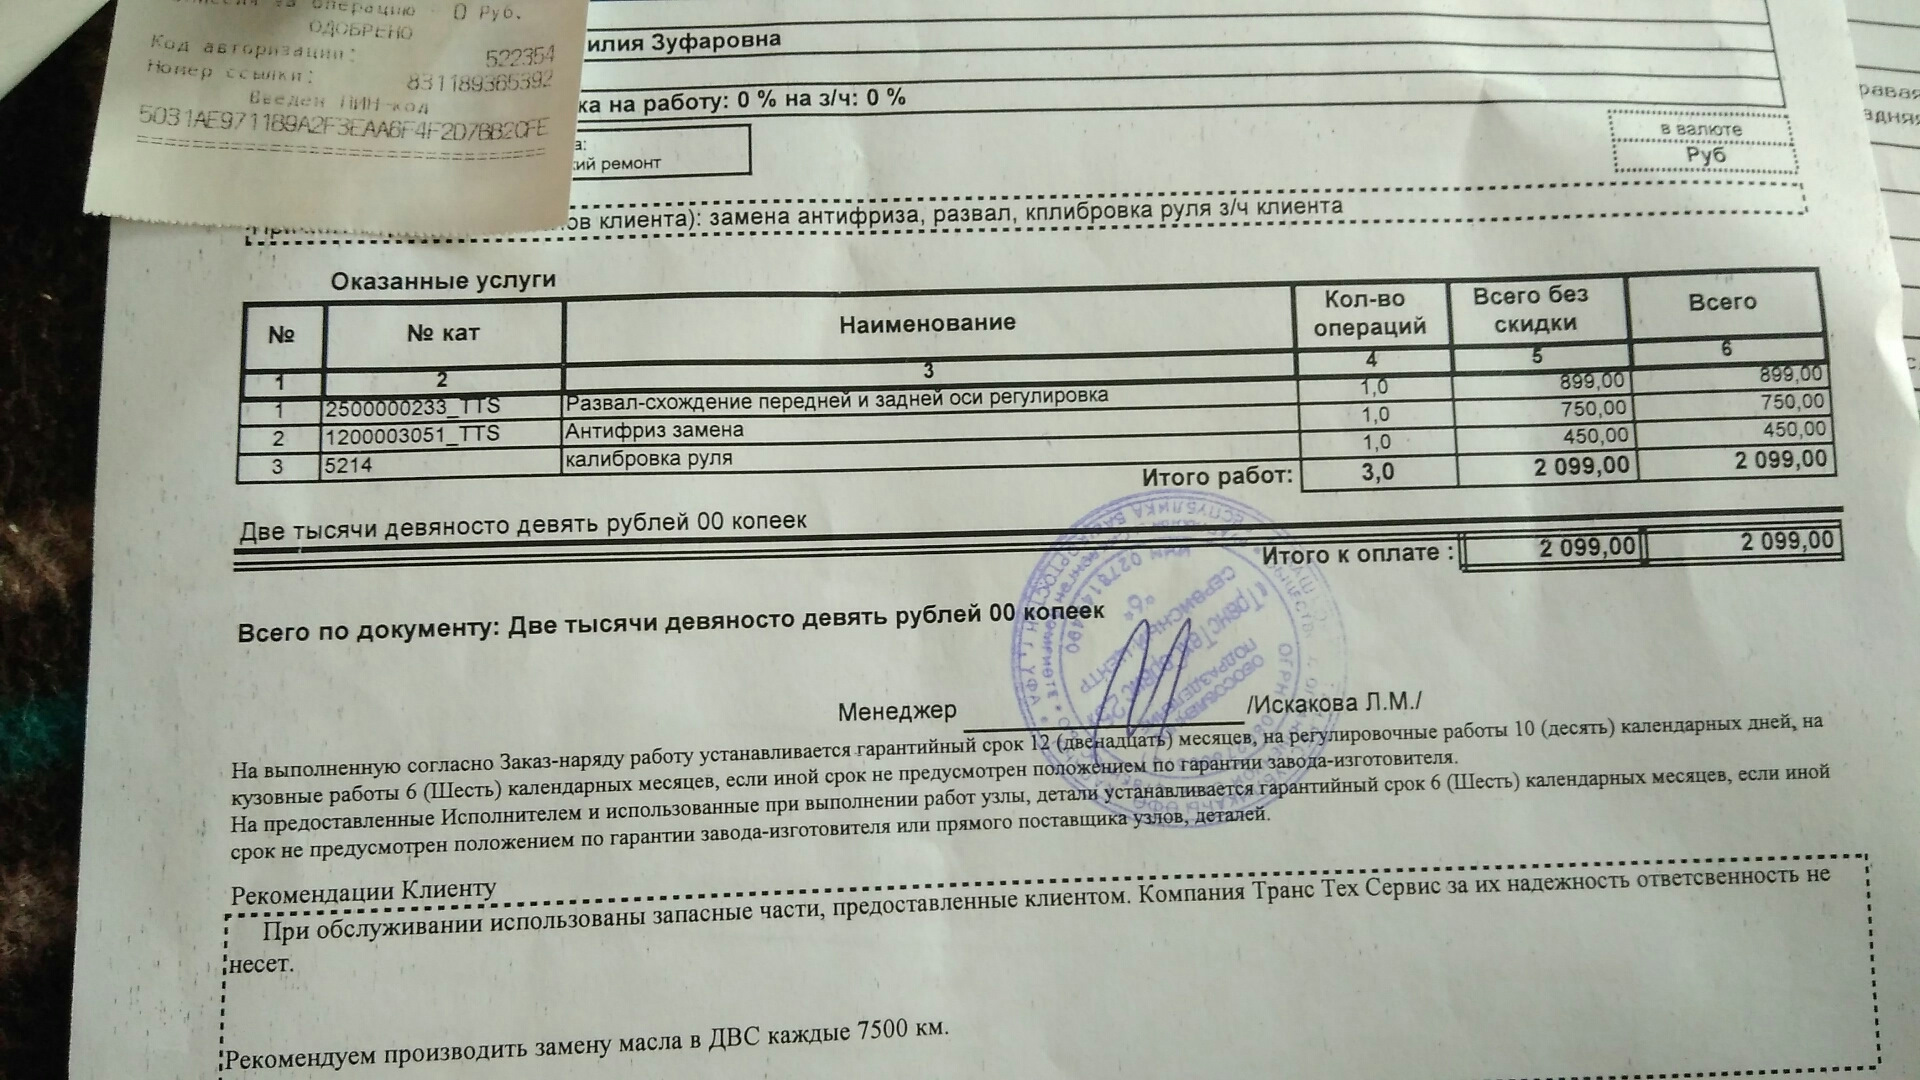 Kia Ceed JD 2 2017 заказ наряд то у официалов. 12 Месяцев гарантийного срока. Четыреста девять рублей